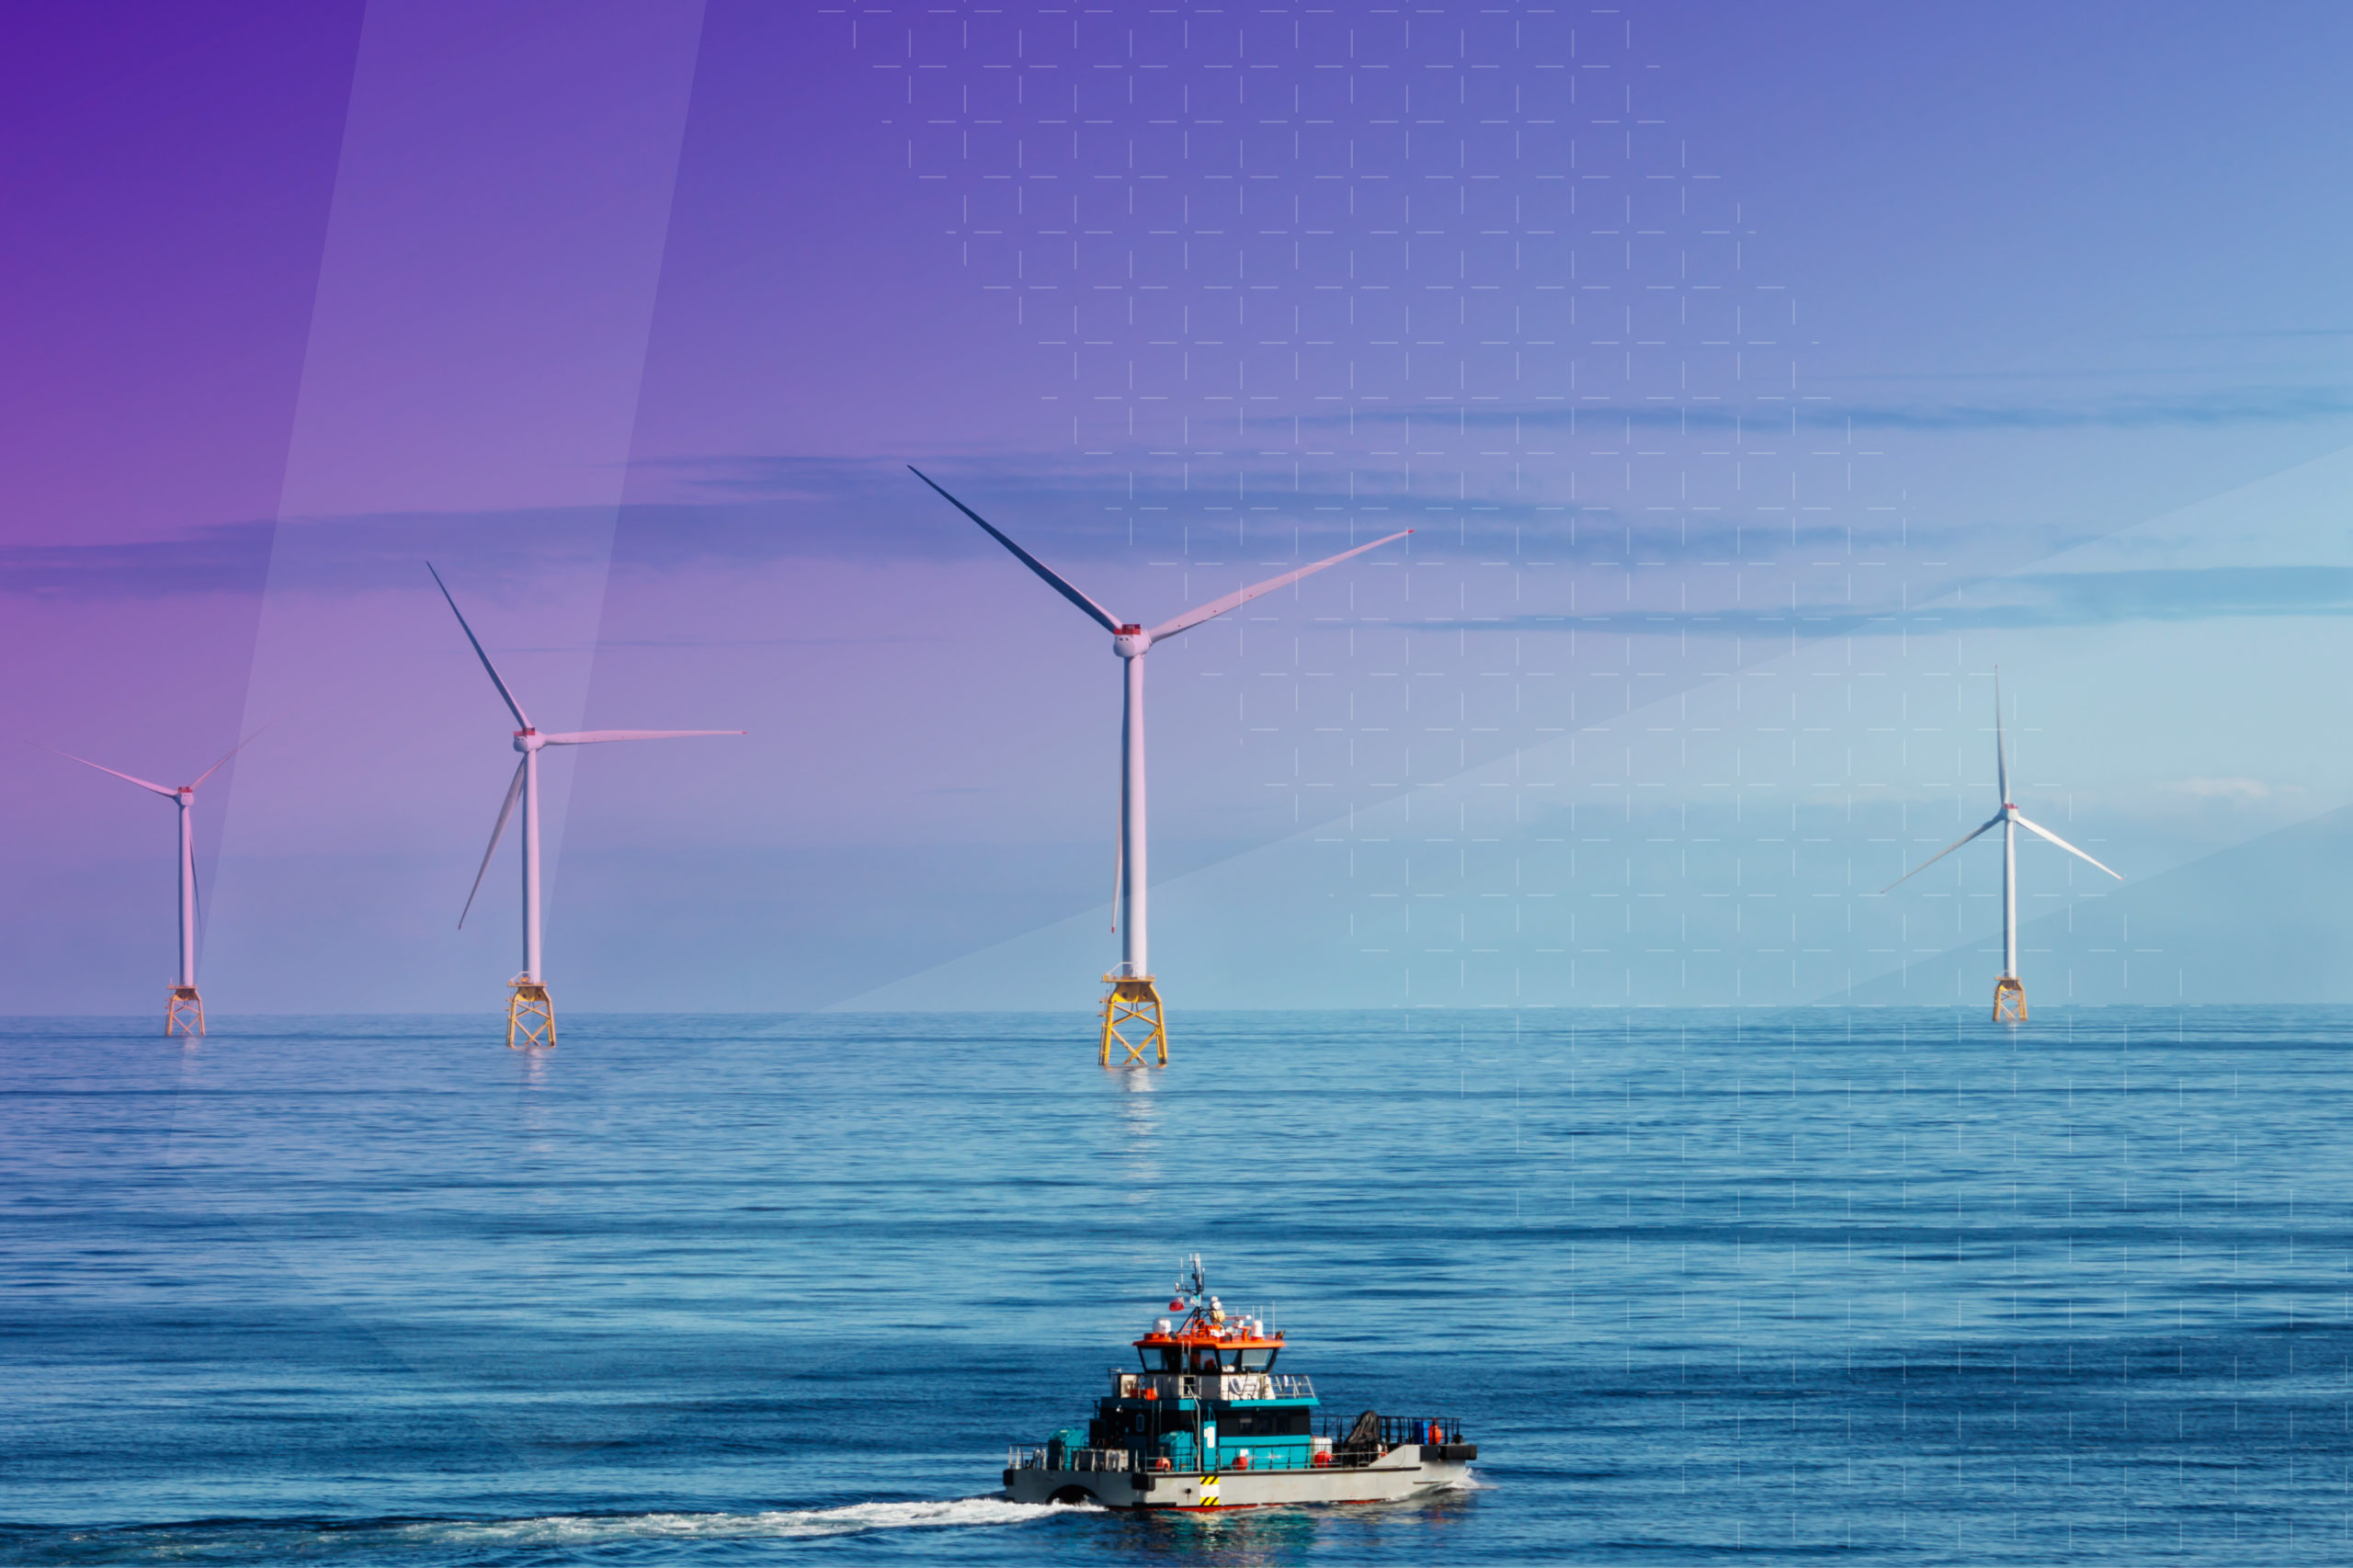 Key skills focus required to meet UK floating wind targets